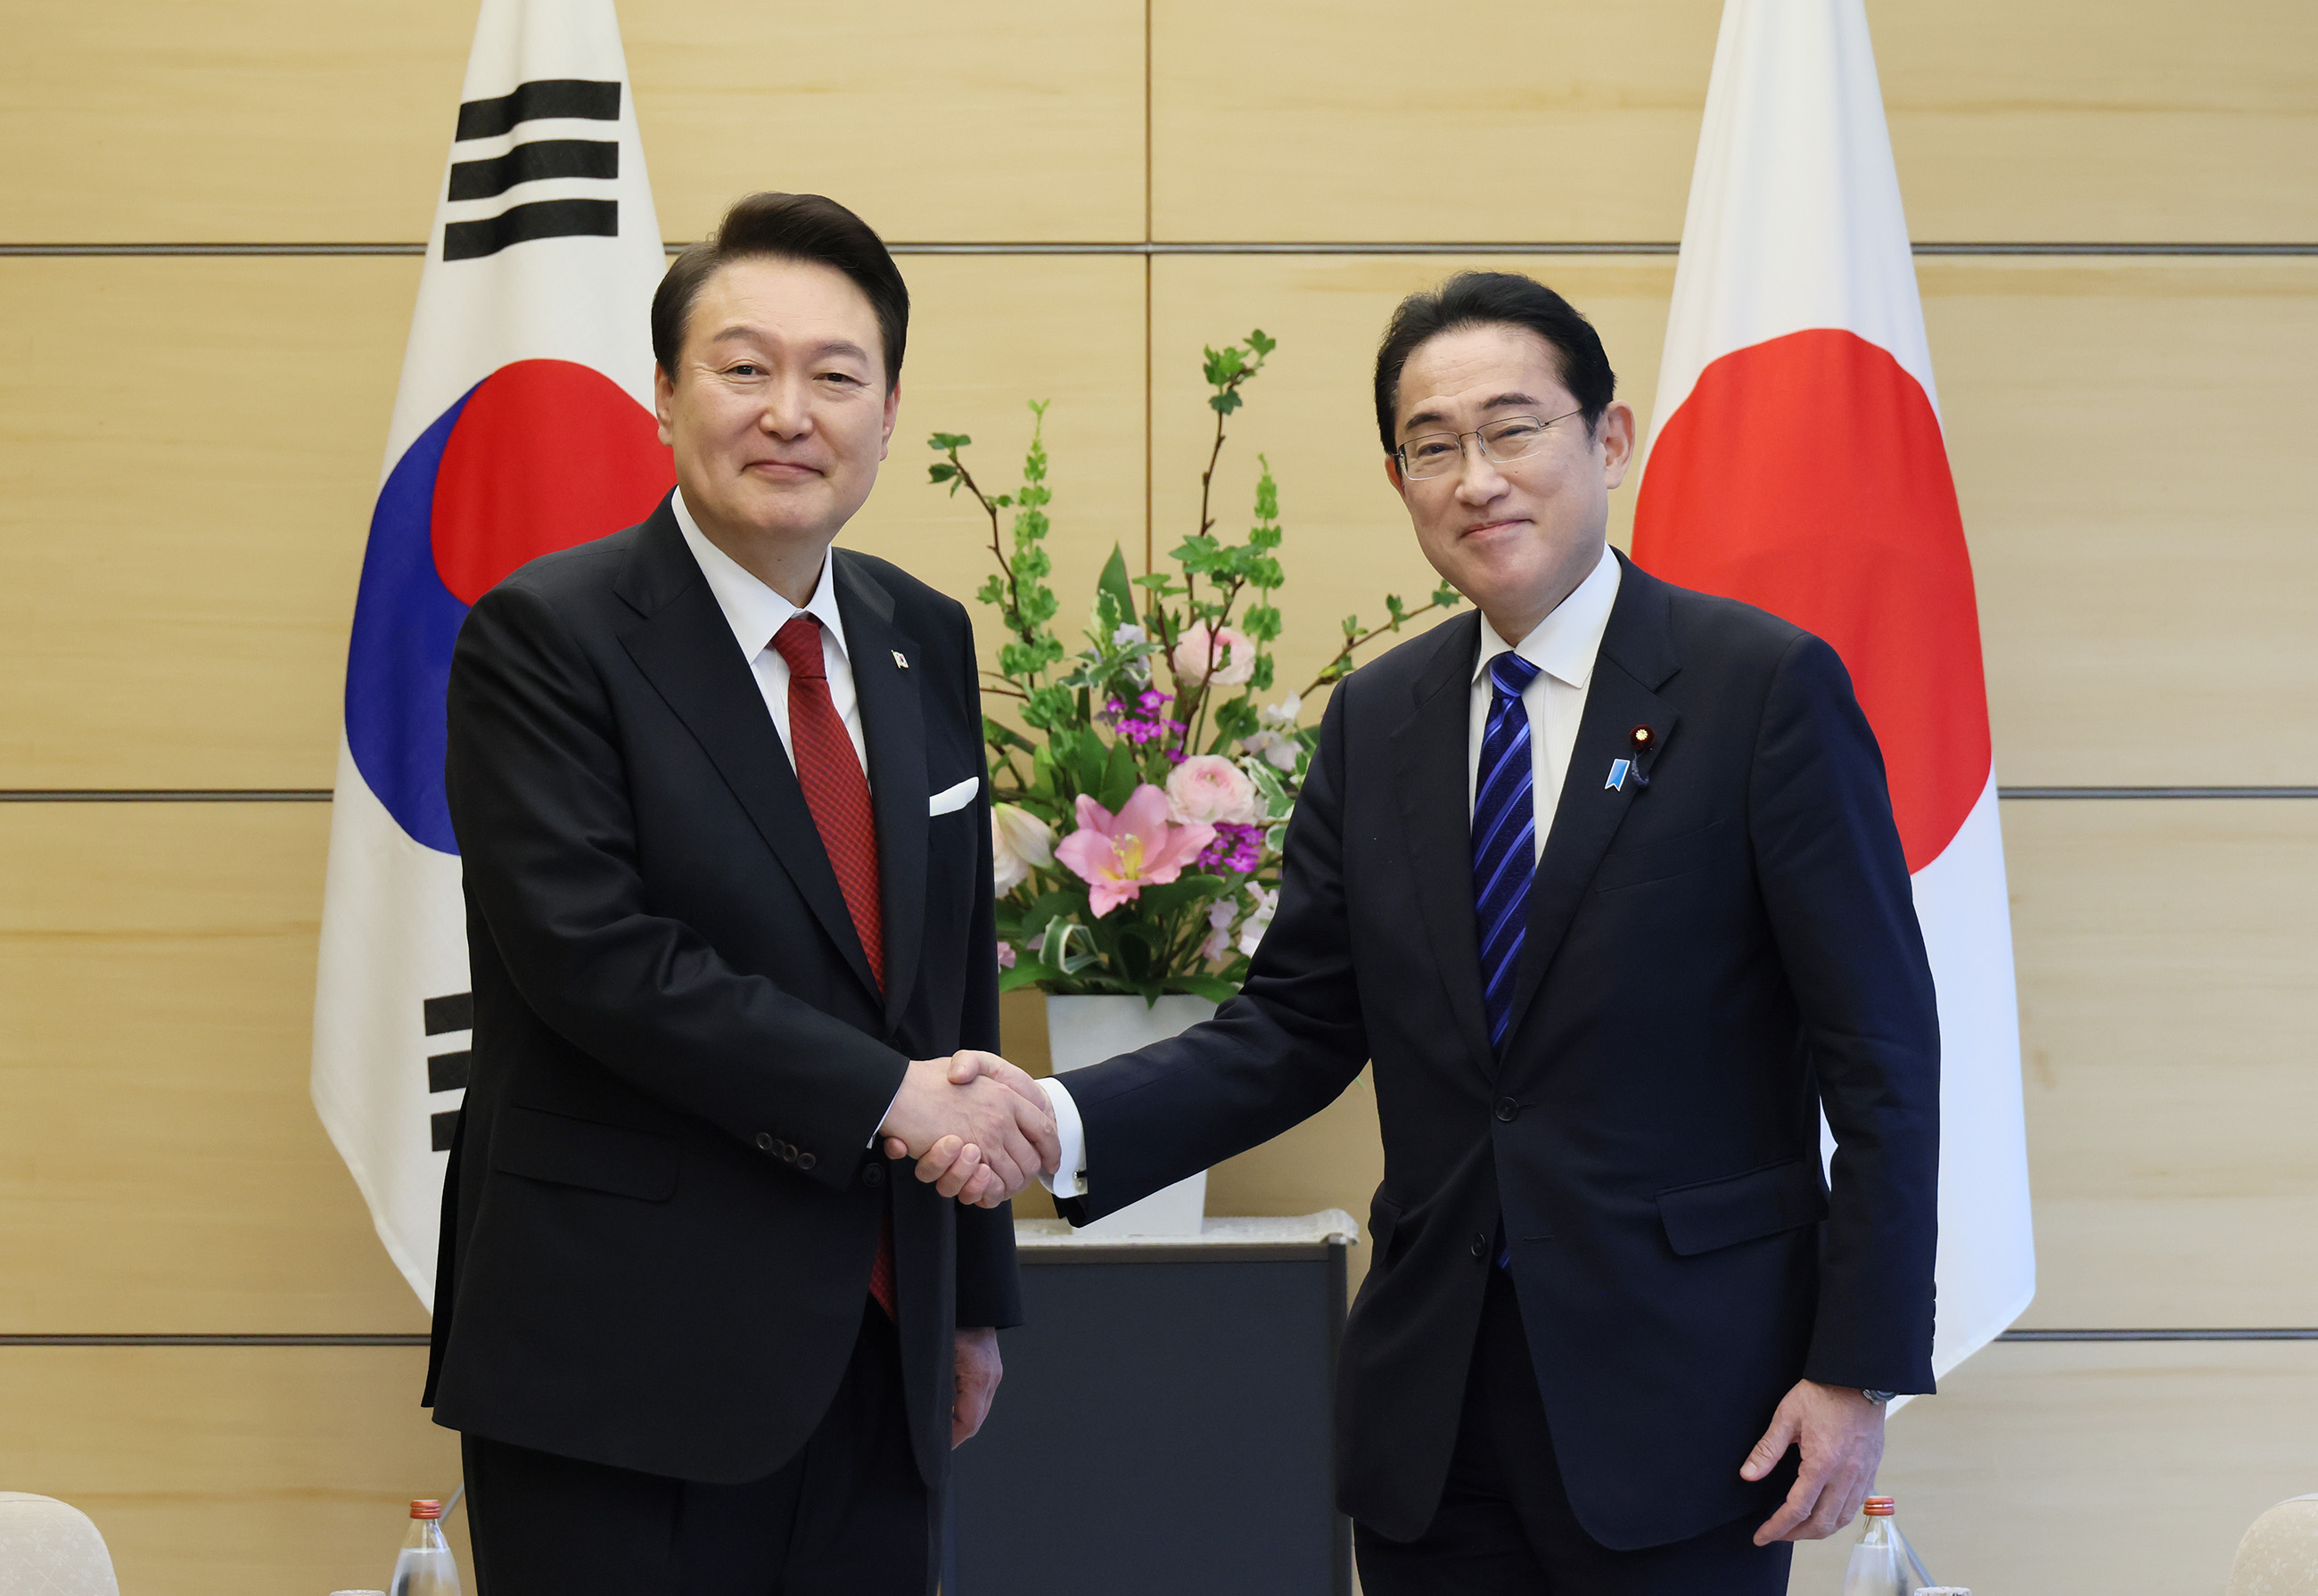 Japan-ROK summit meeting (small-group meeting) (1)